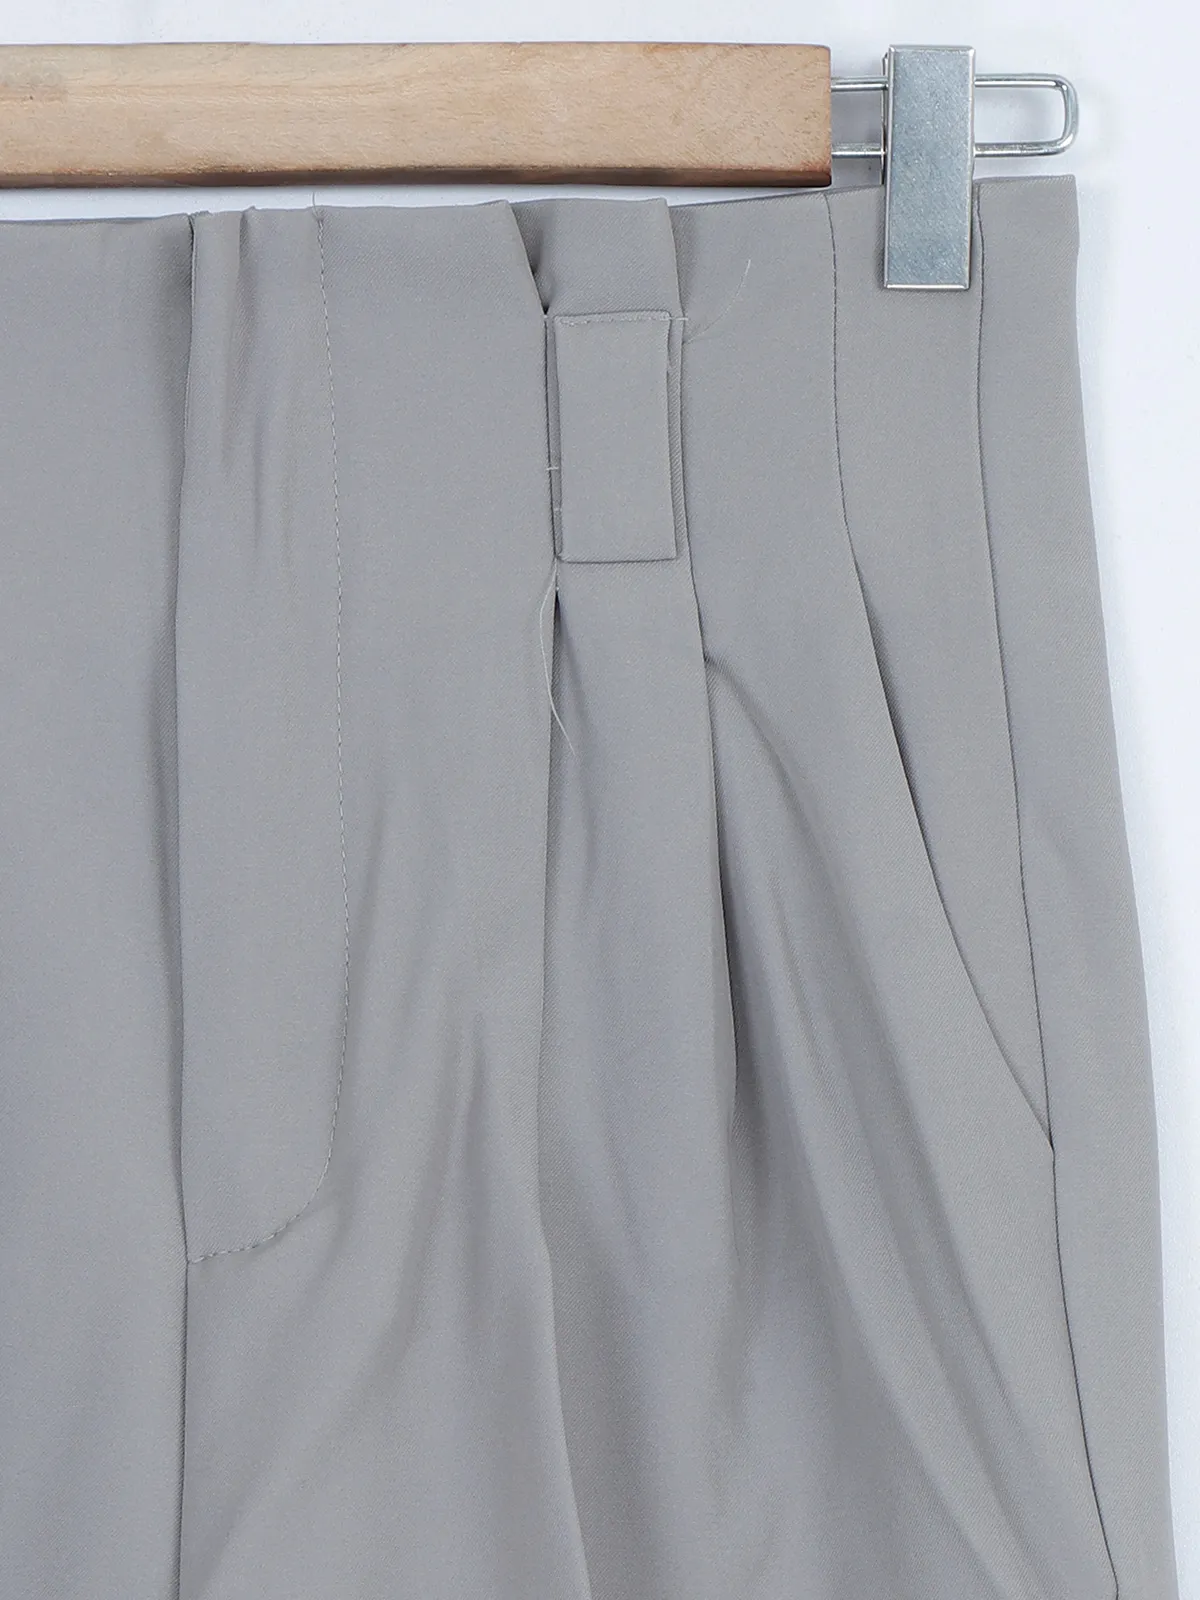 Boom plain grey lycra formal pant